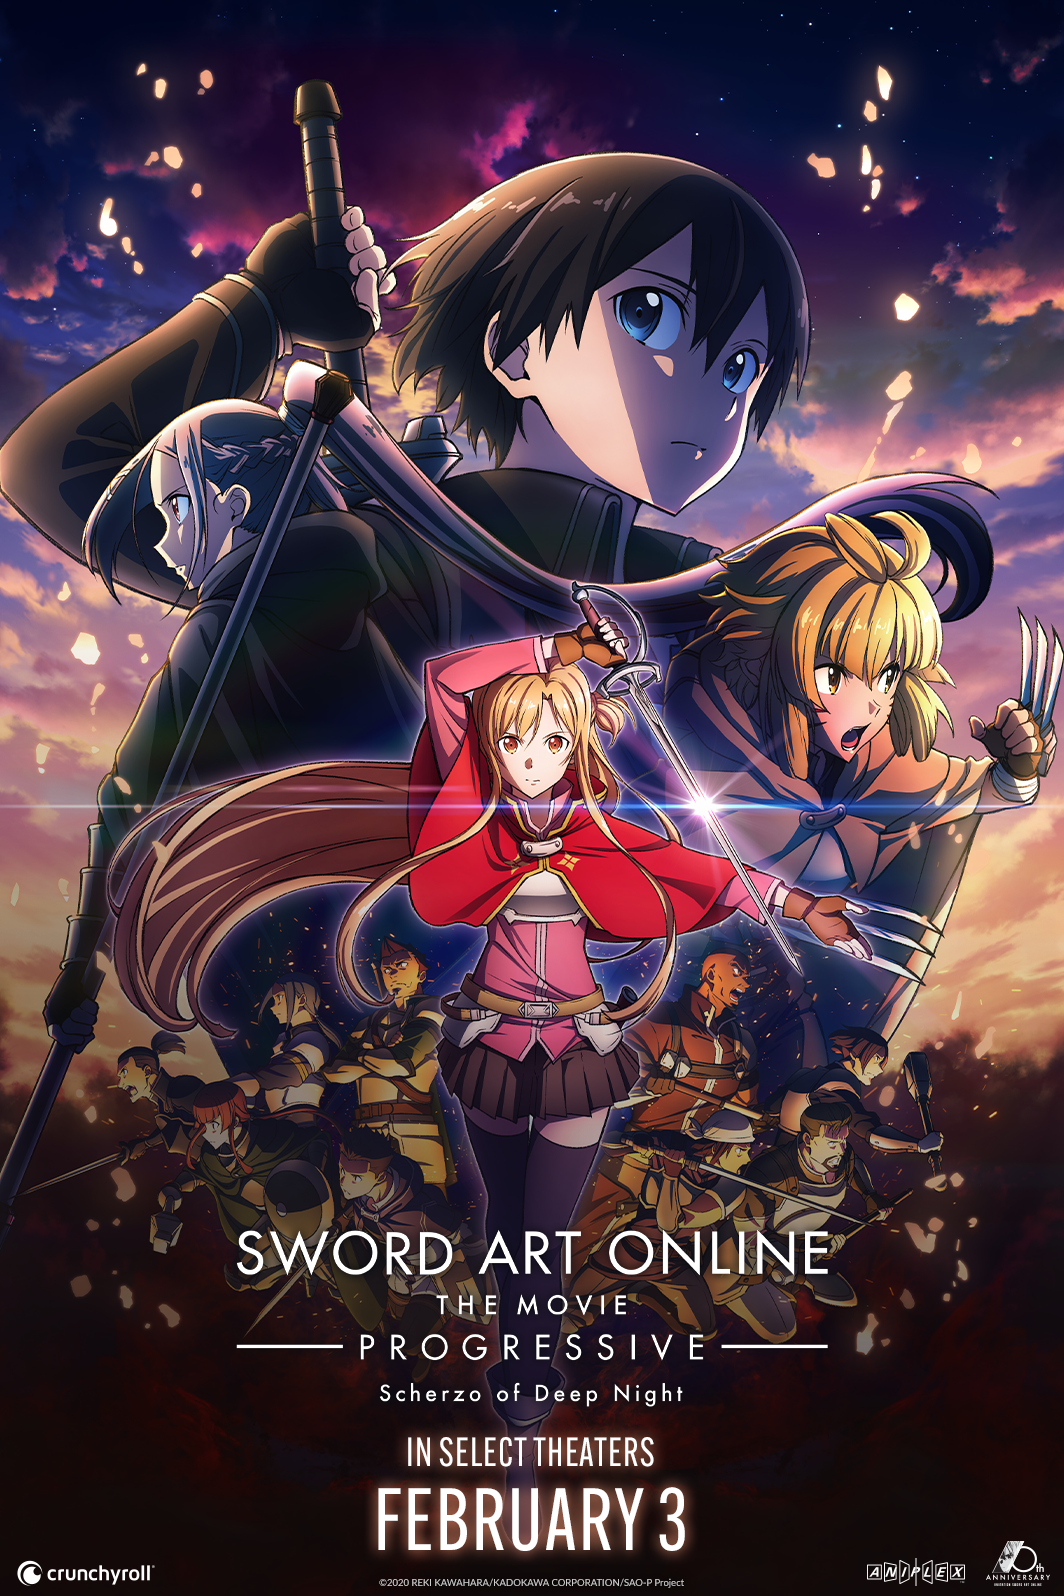 Sword Art Online Progressive Scherzo of Deep Night English Dubbed trailer North American release February 3